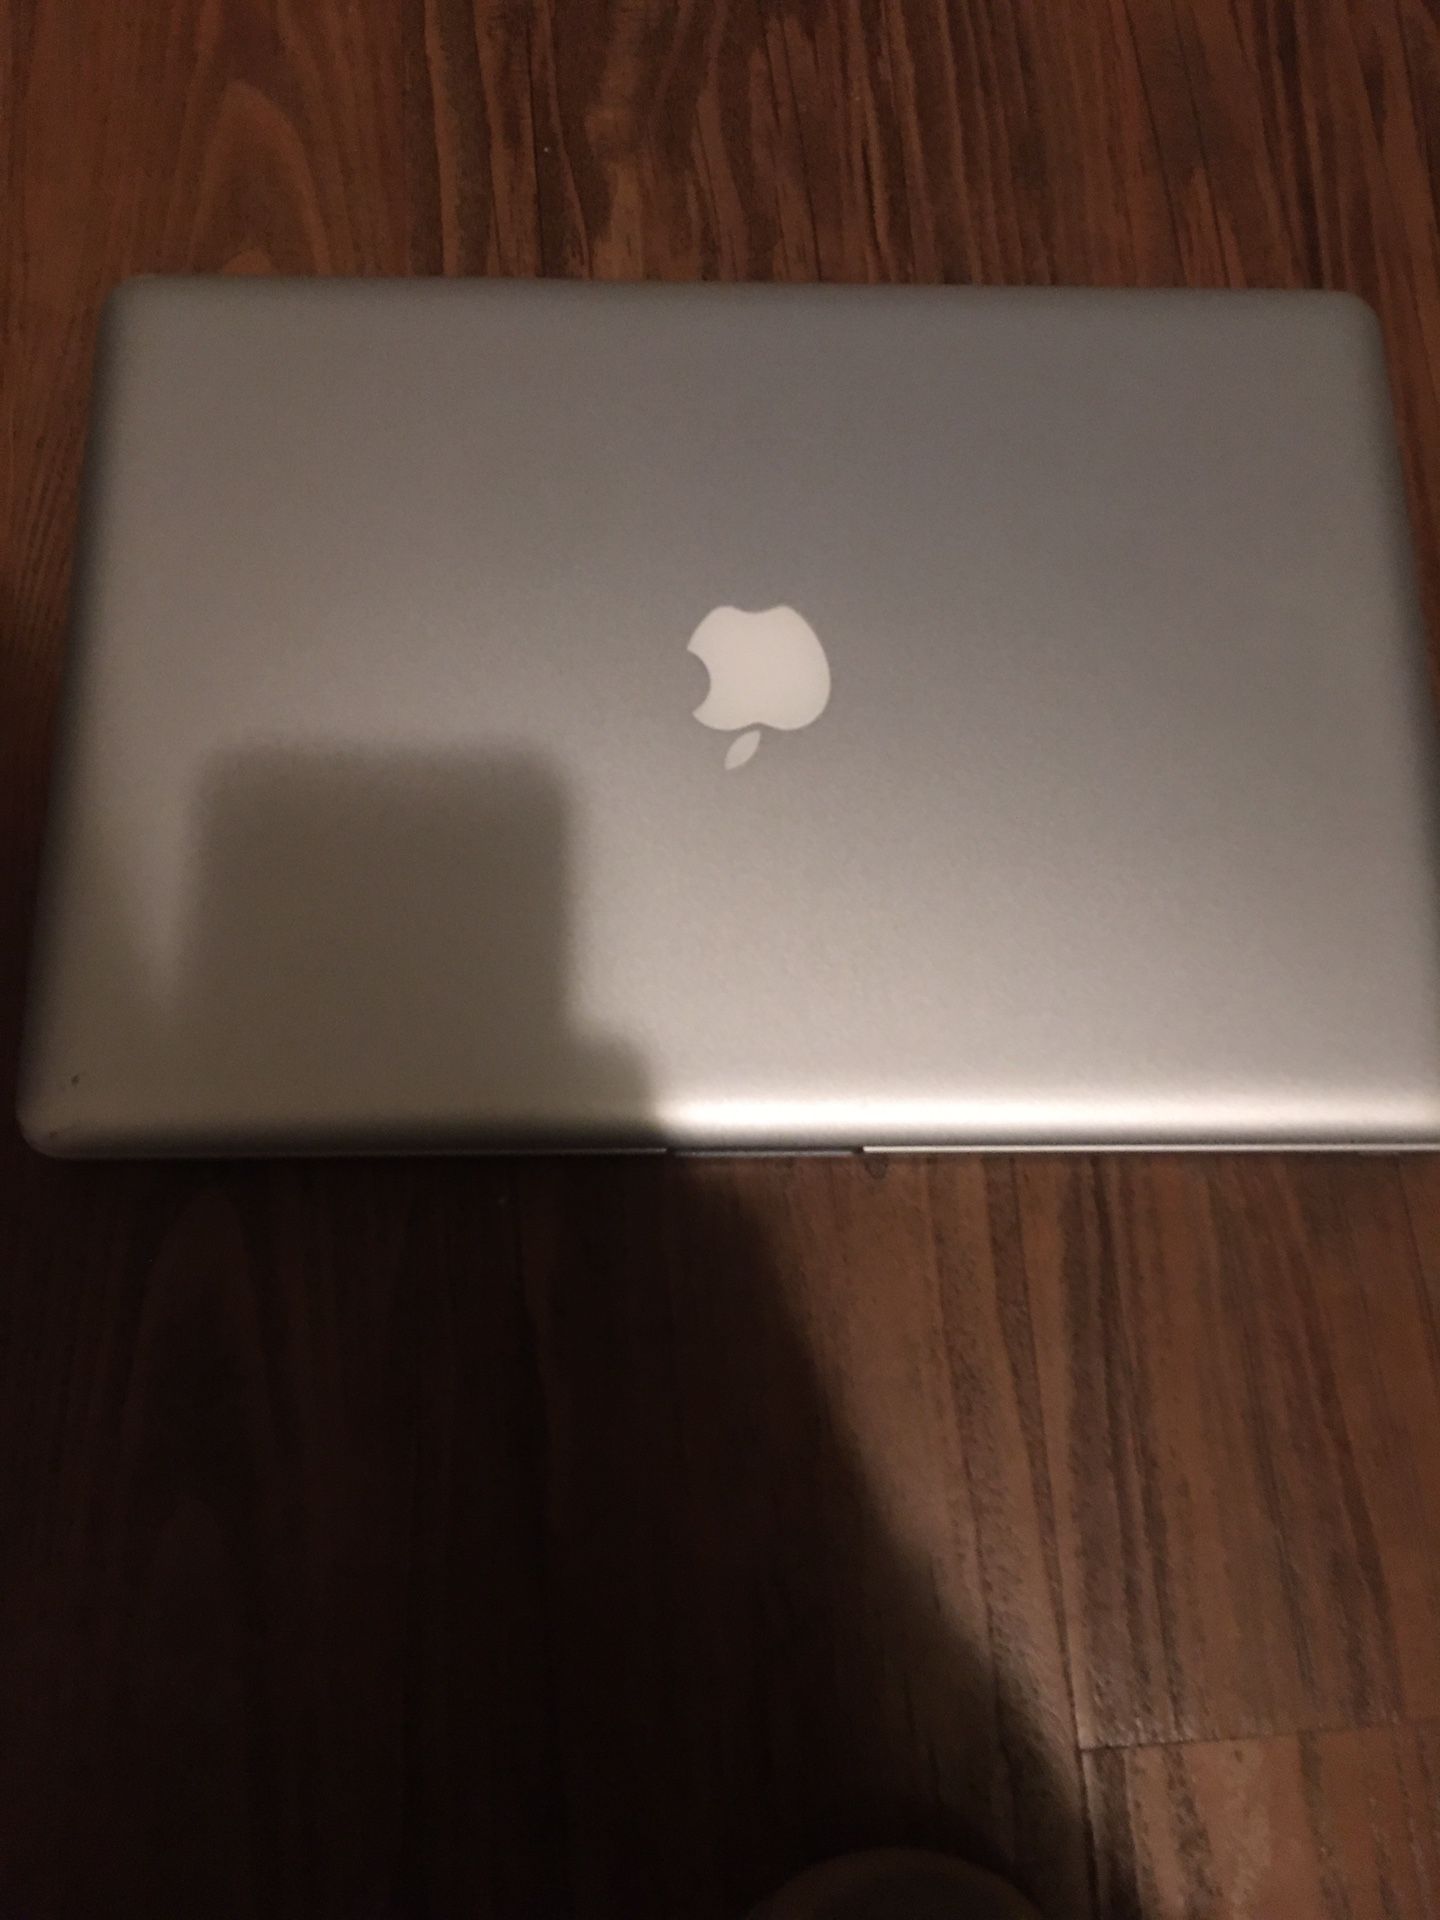 Mid 2012 MacBook Pro i7